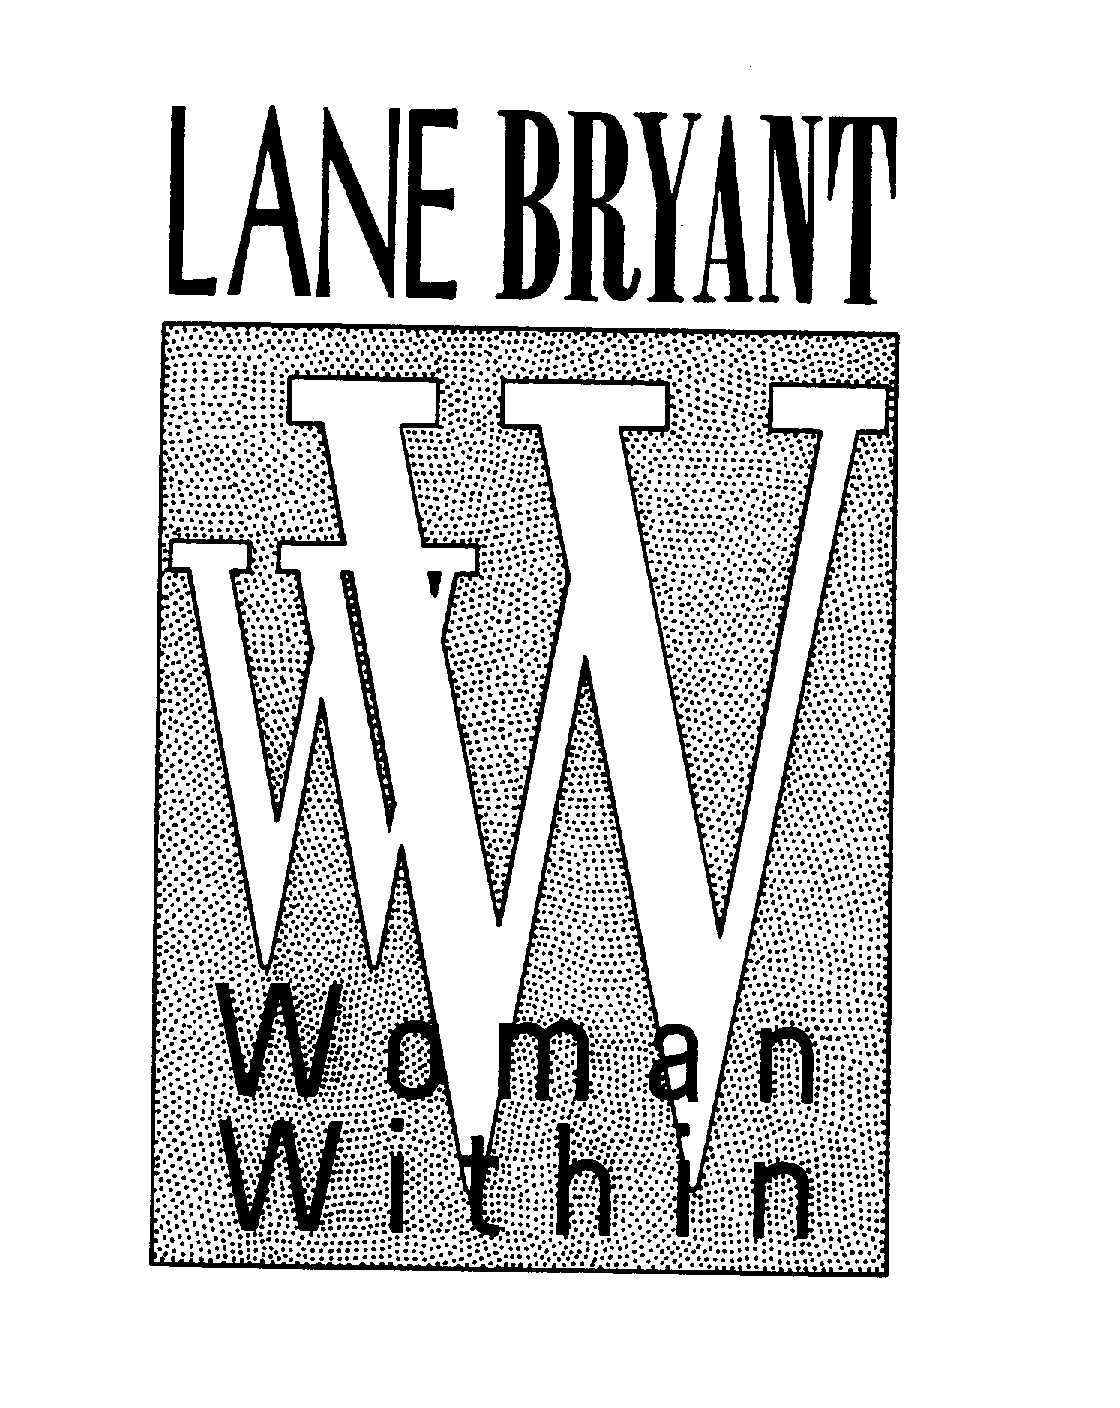  LANE BRYANT WW WOMAN WITHIN